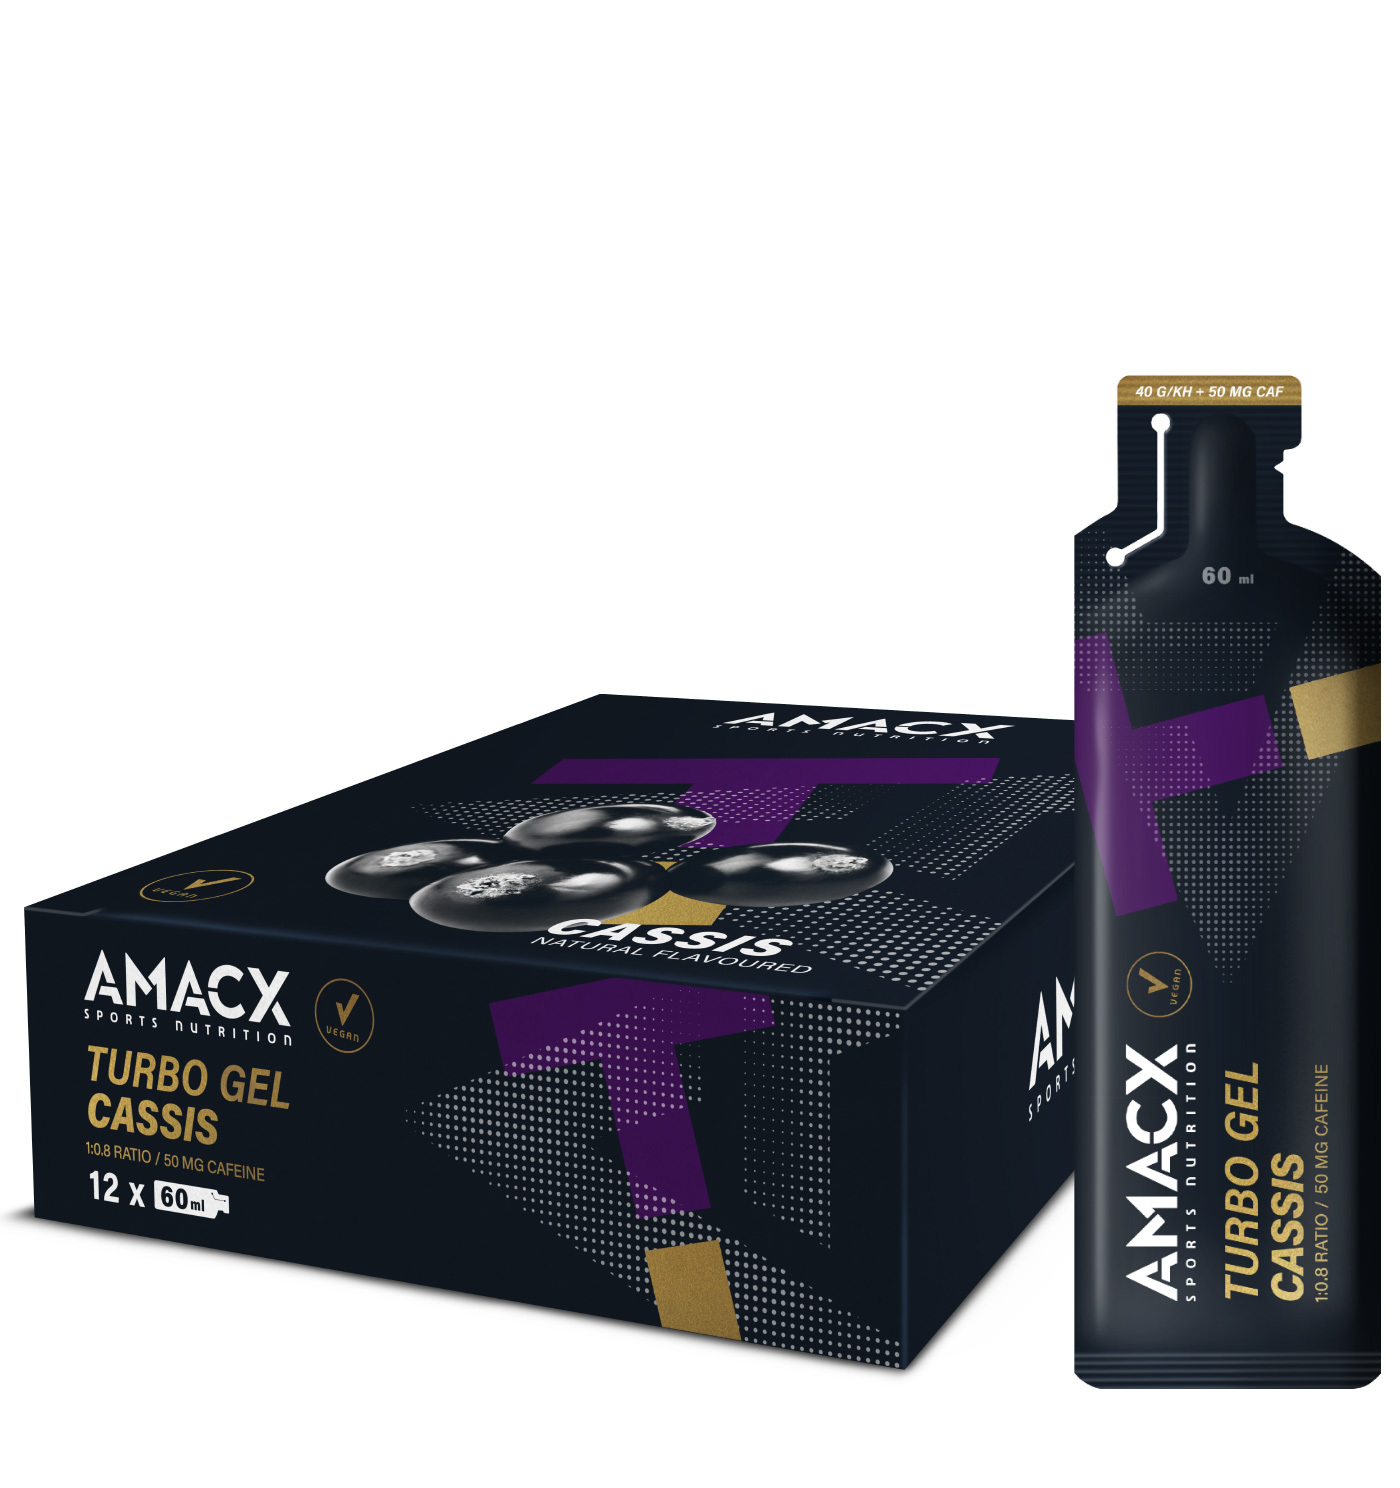 Amacx Turbo Gel 60 ml Cassis 12 stuks